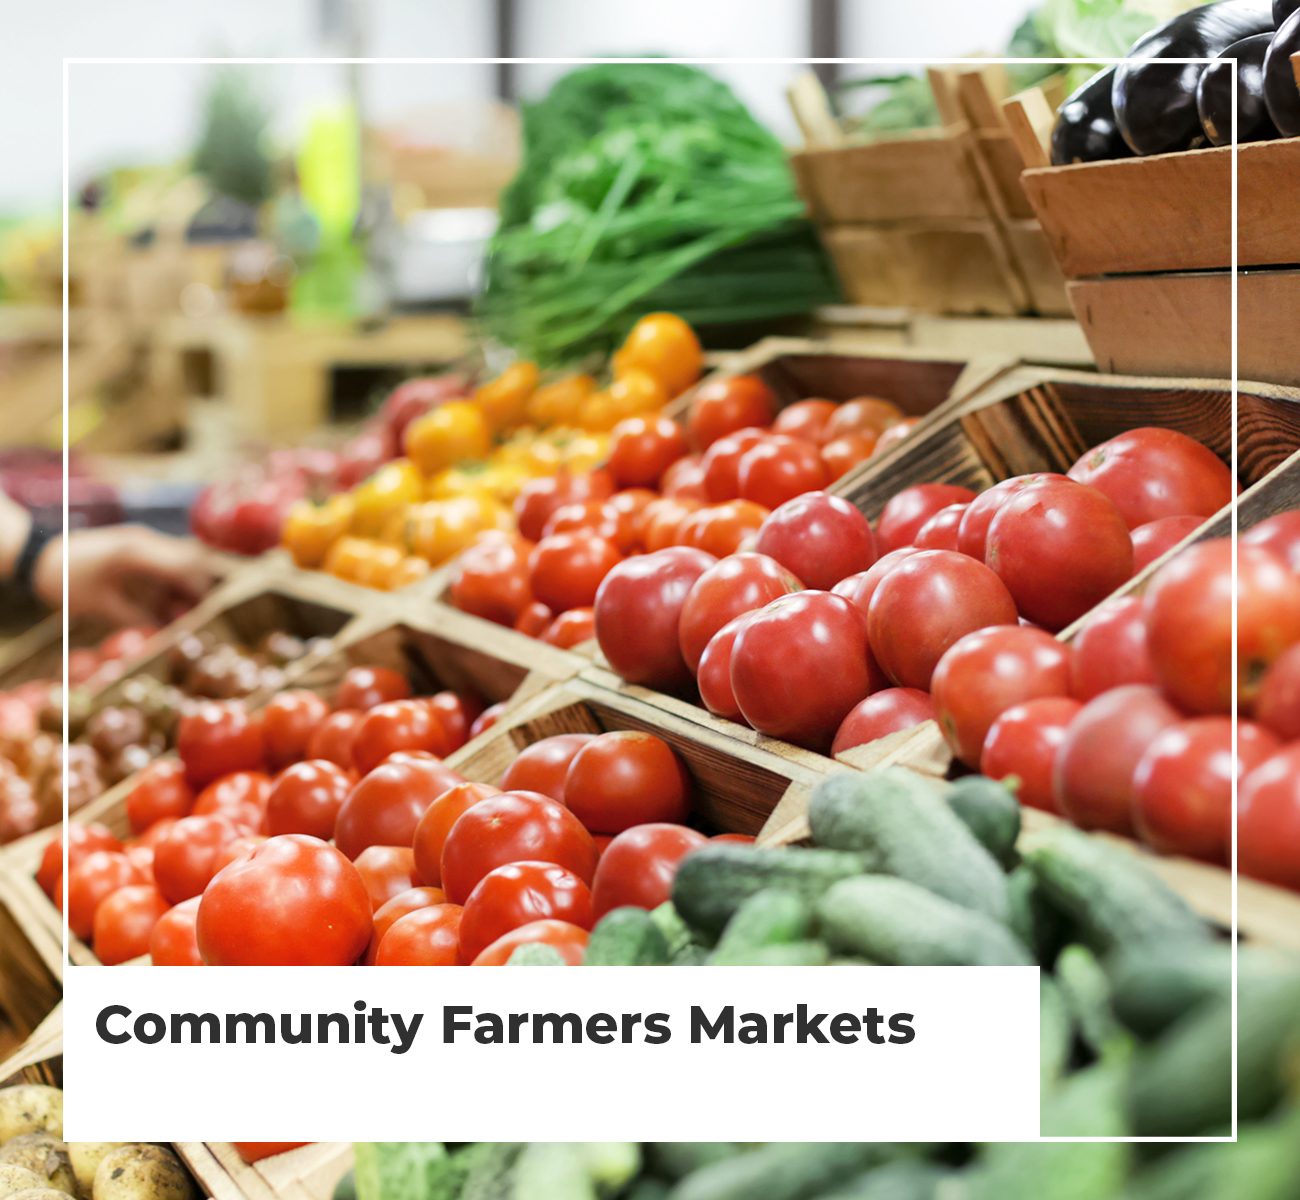 Community Farmers Markets - Main Image